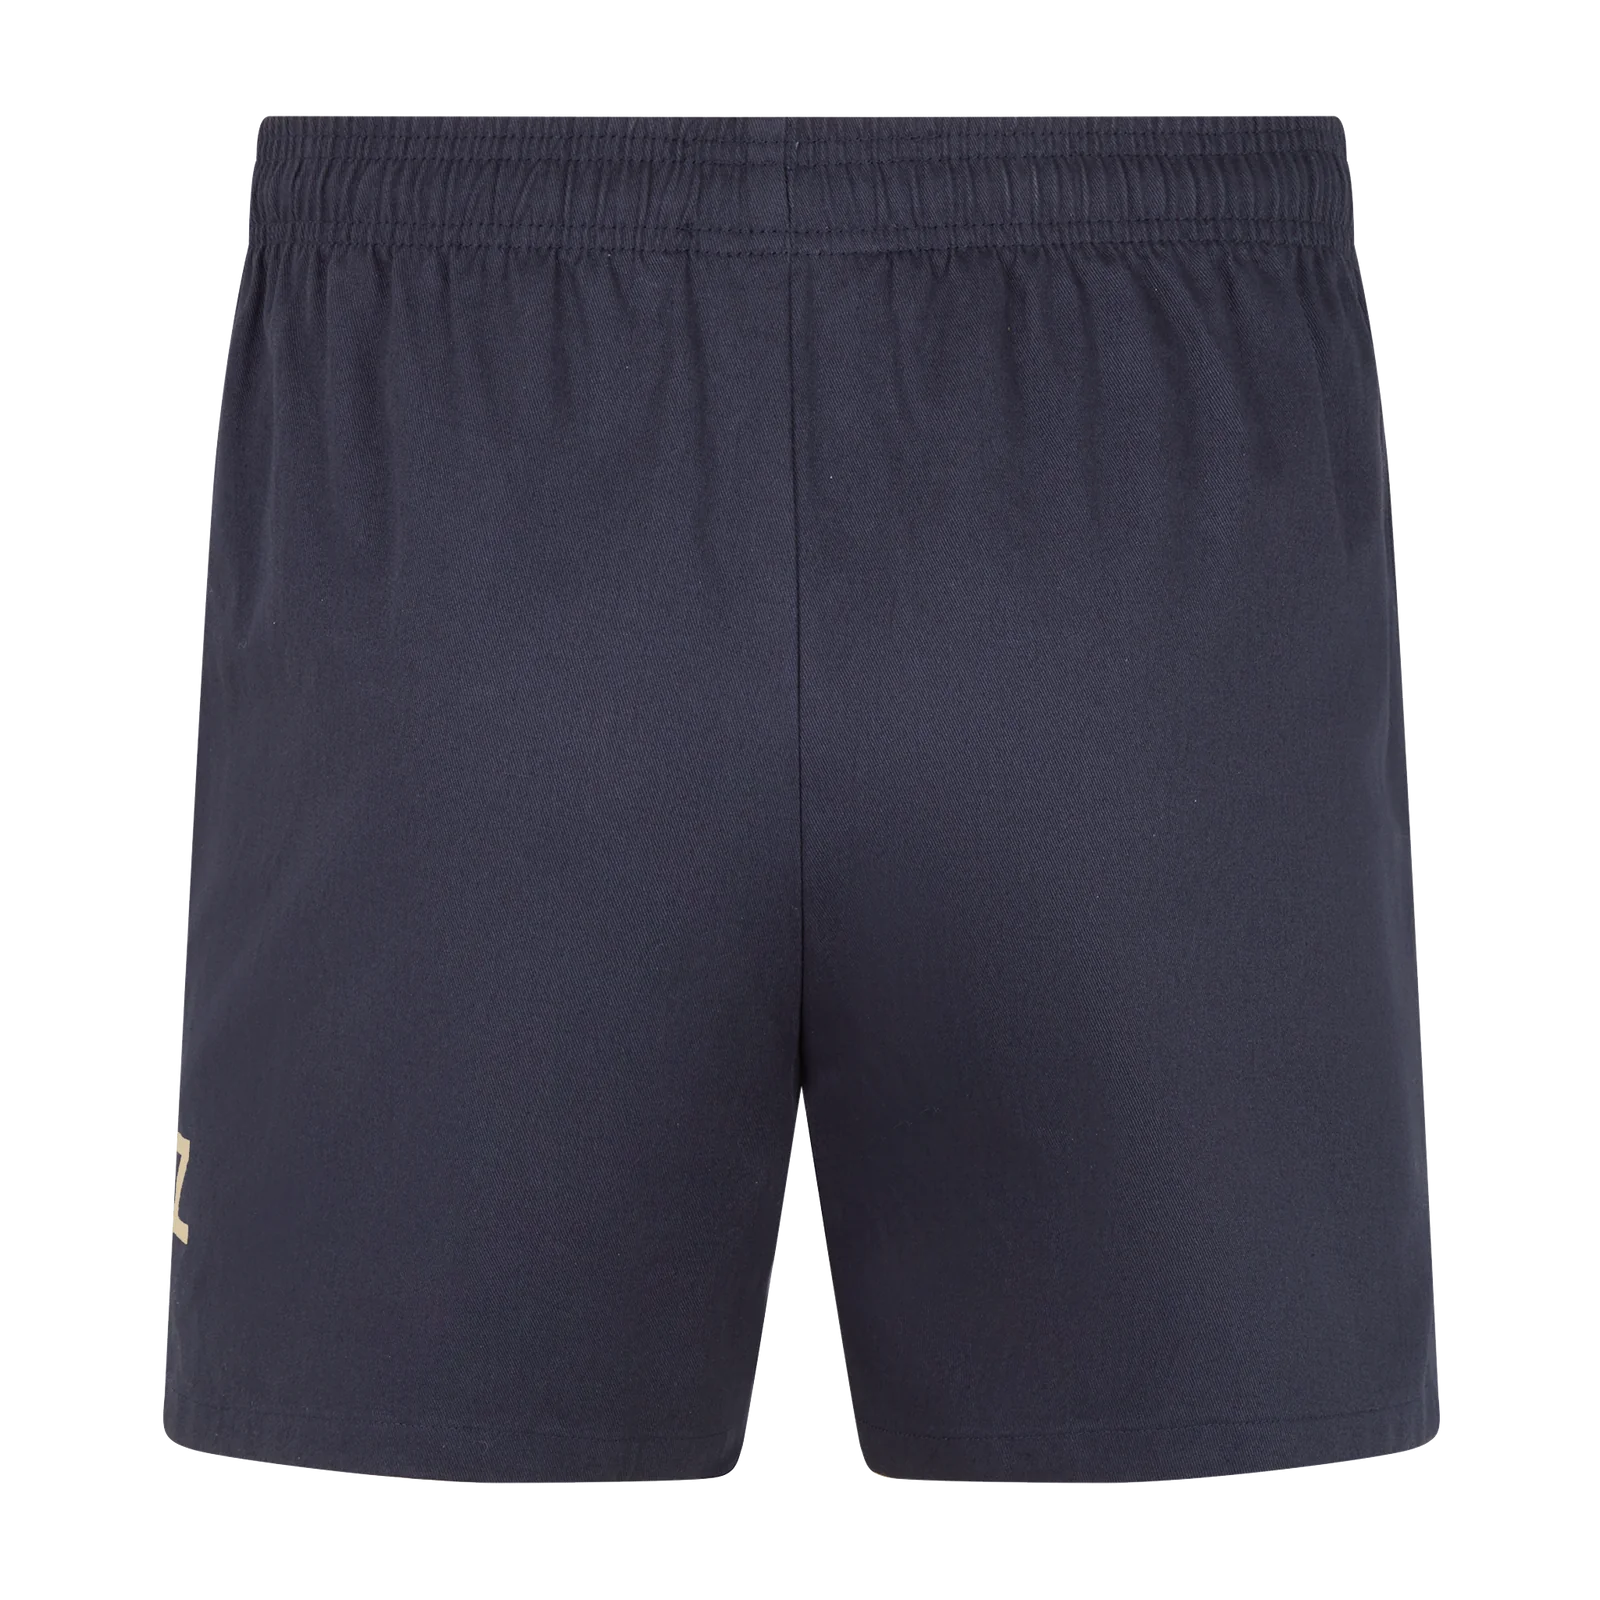 Ridgeline Unisex Hose Down Shorts - Navy